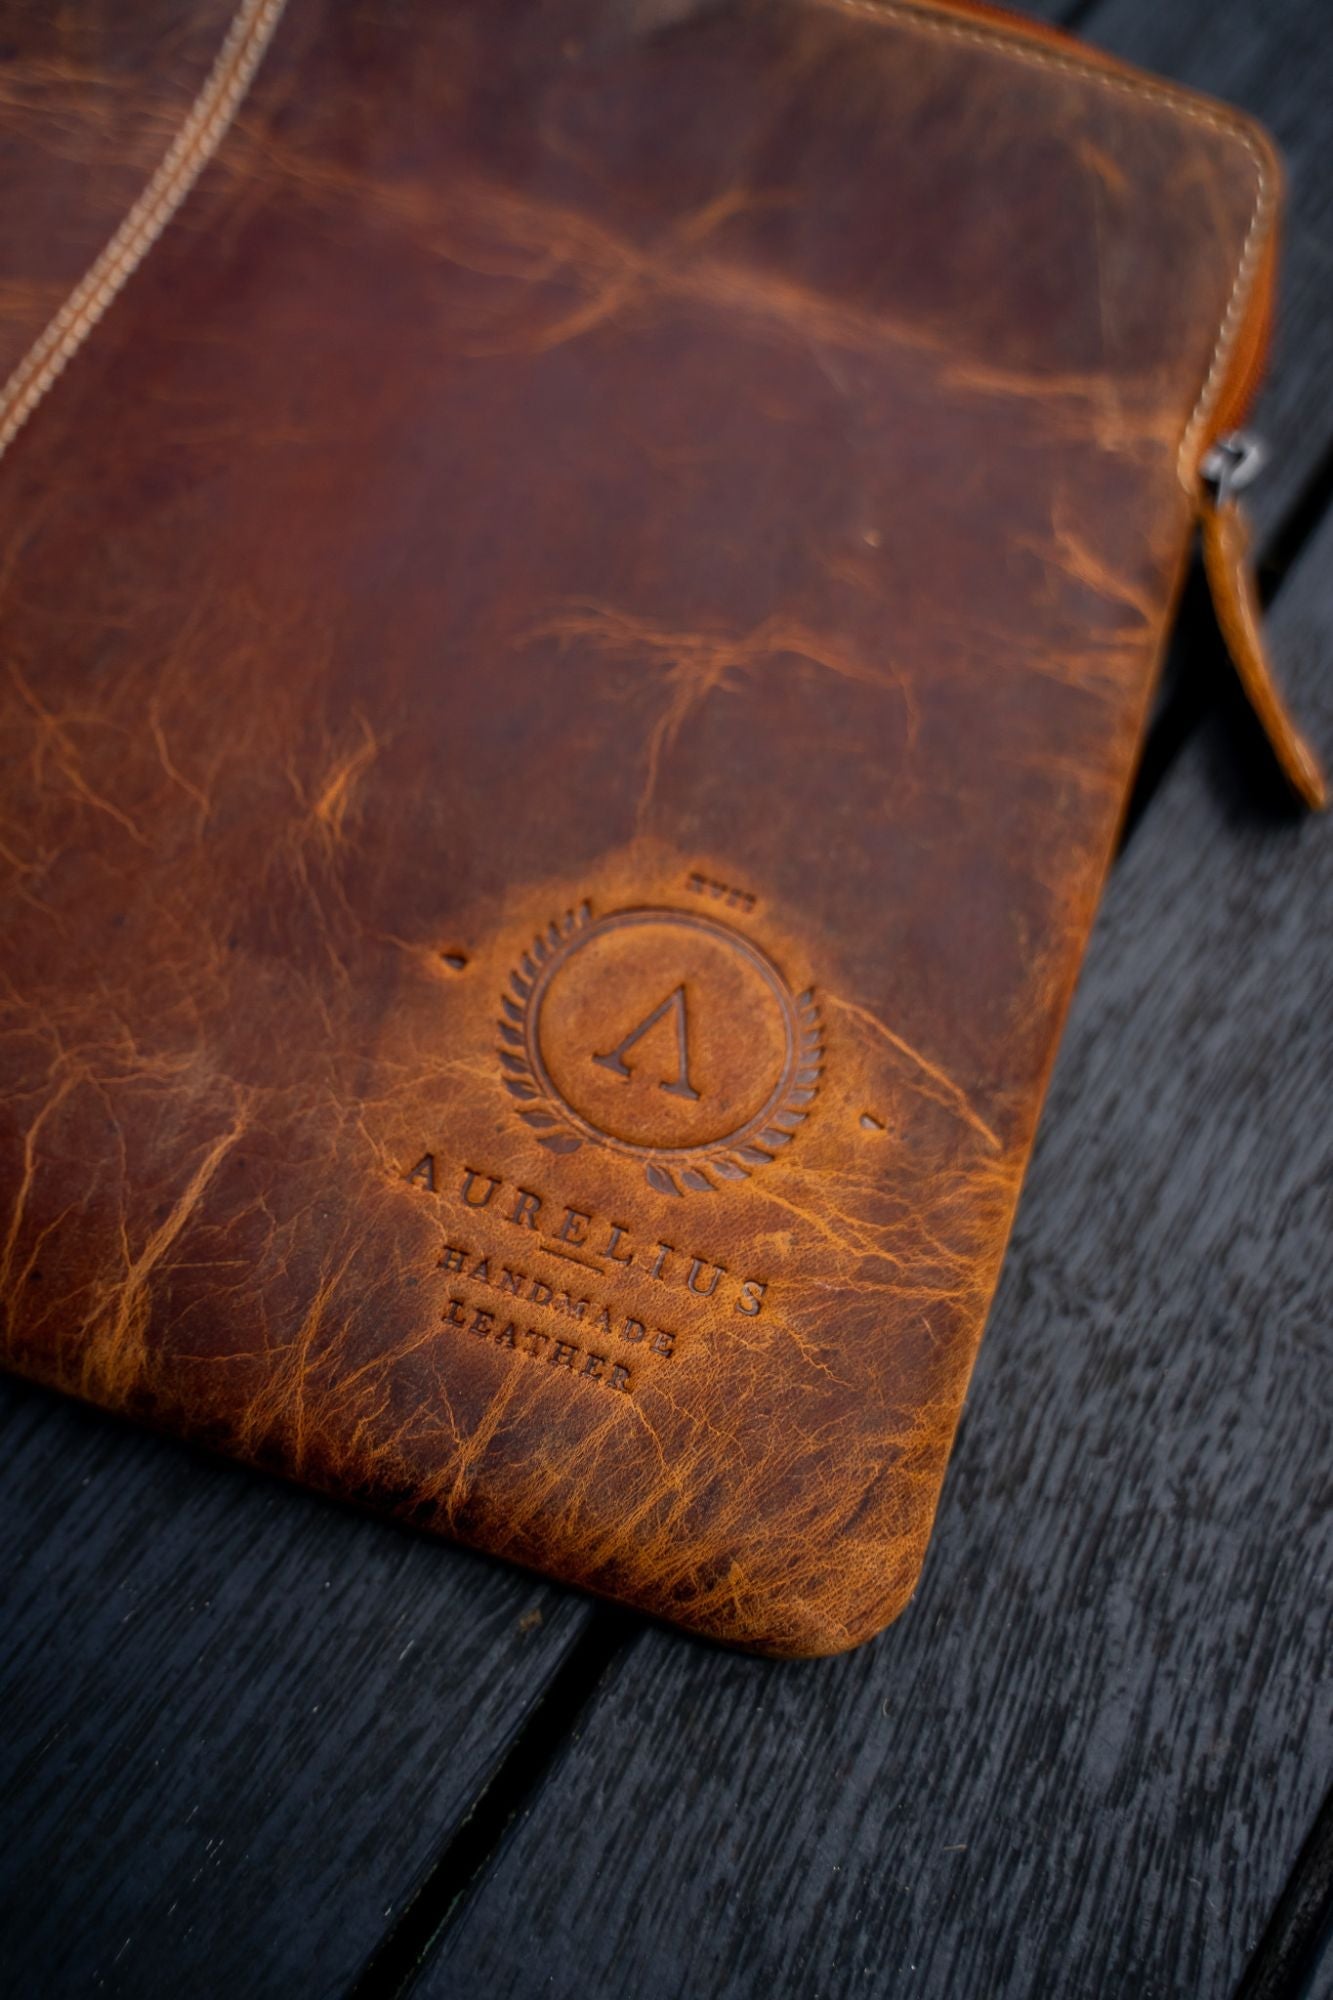 Aurelius Leather Leather Bag Aurelius Leather Hunter Tan Leather Laptop Sleeve